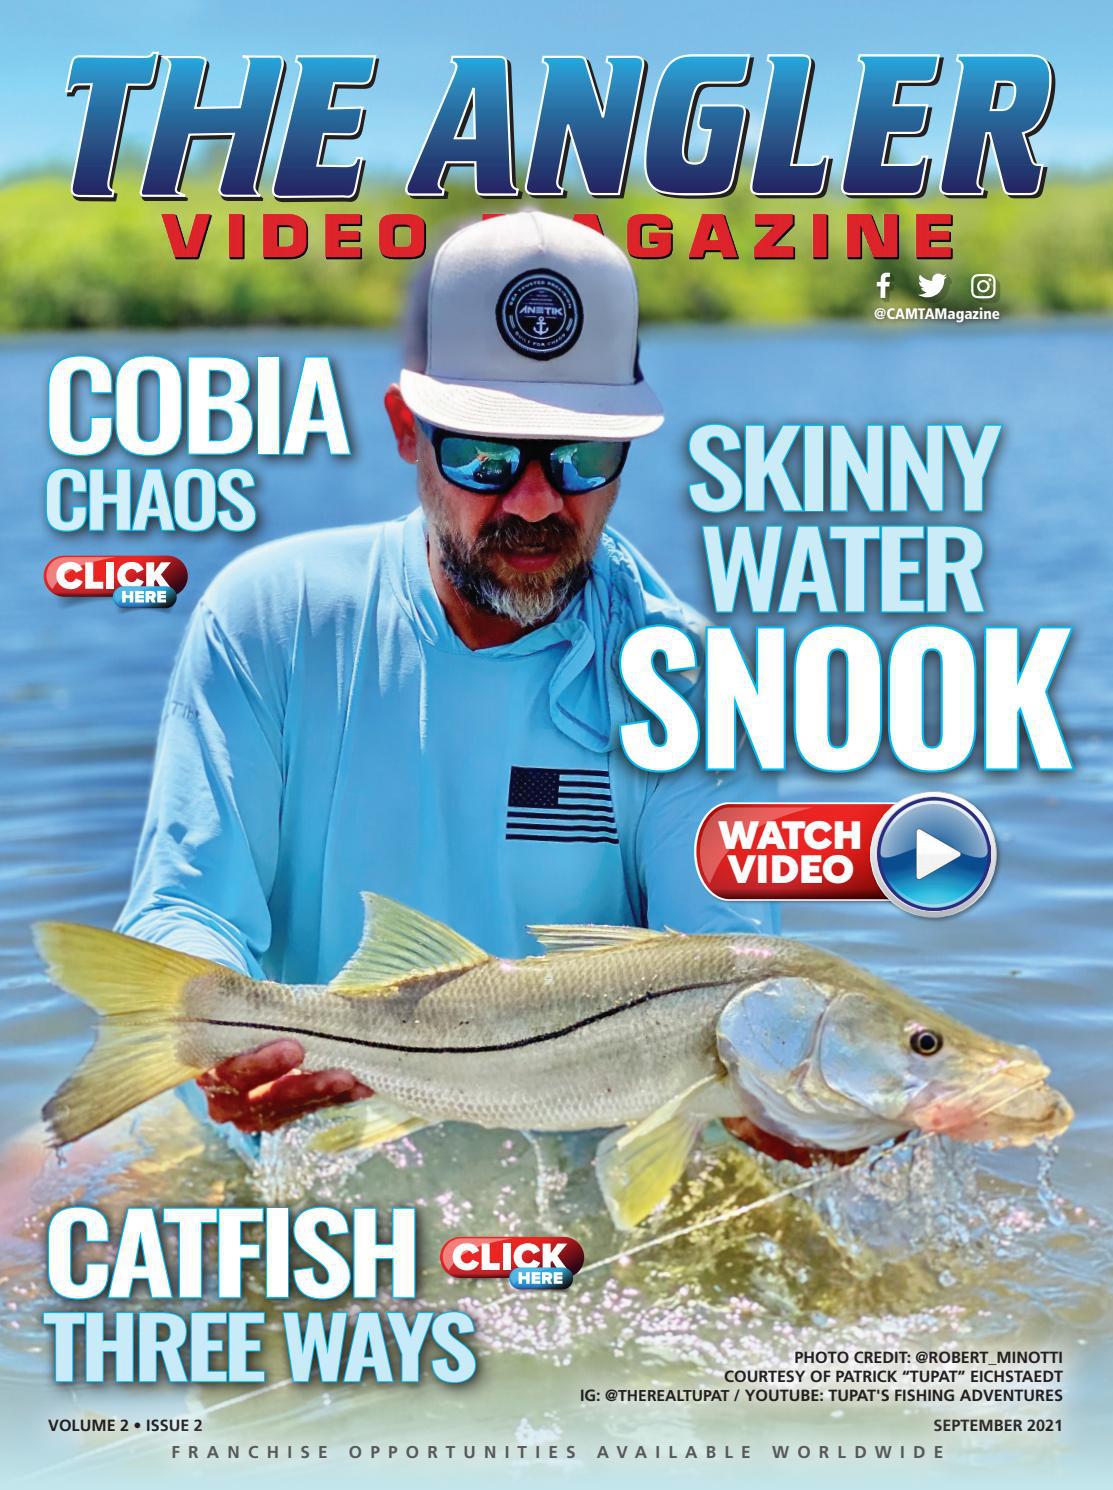 The Angler Video Magazine | September 2021 Edition